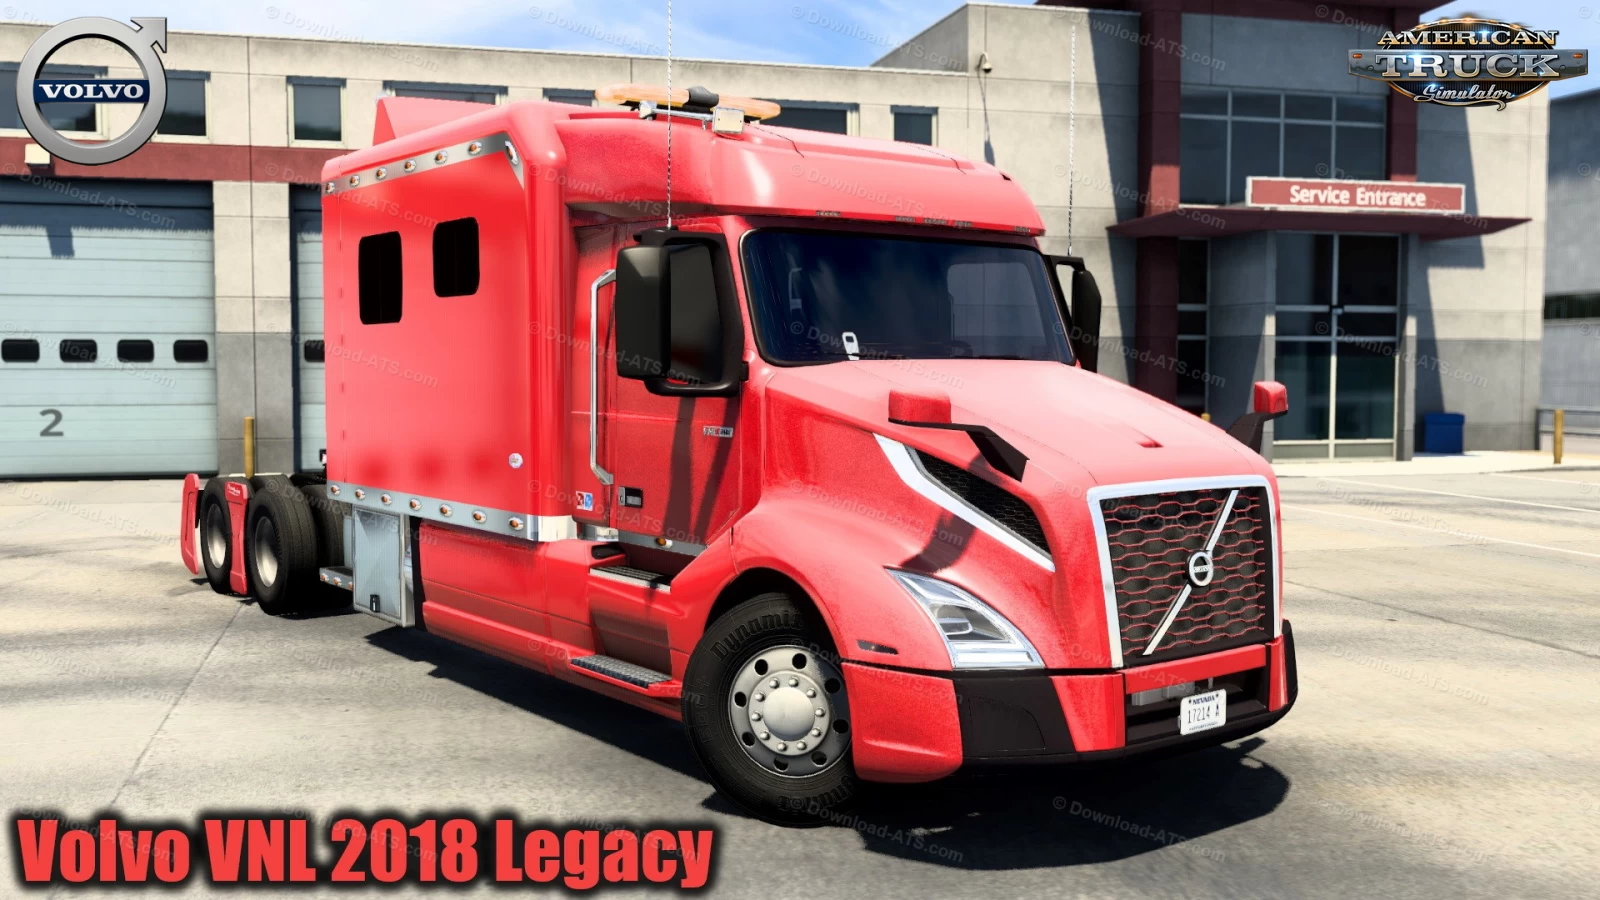 Volvo VNL 2018 Legacy v1.0 (1.40.x) for ATS